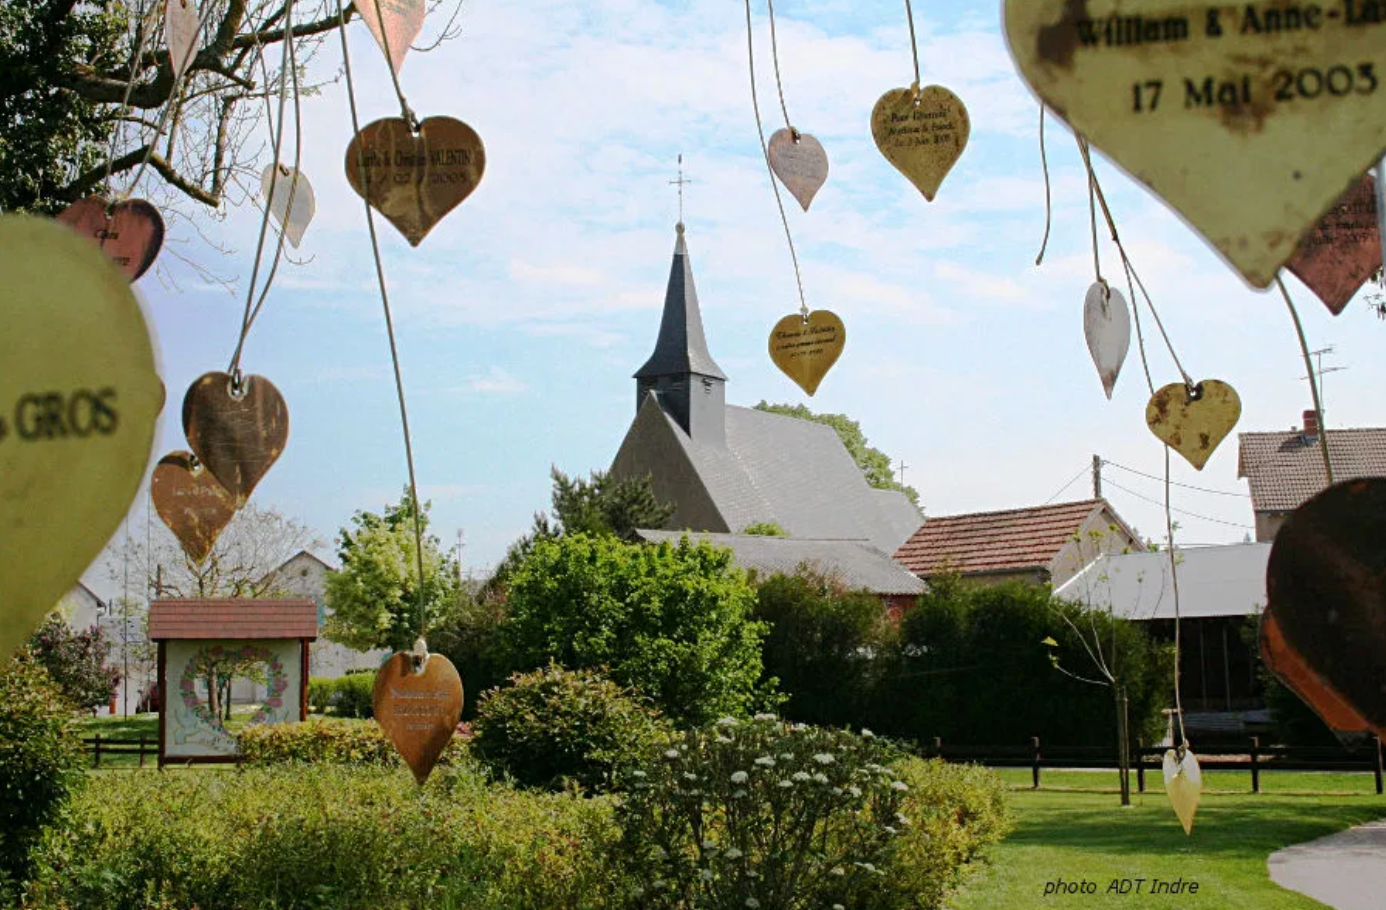 Saint Valentin - most romantic village in France